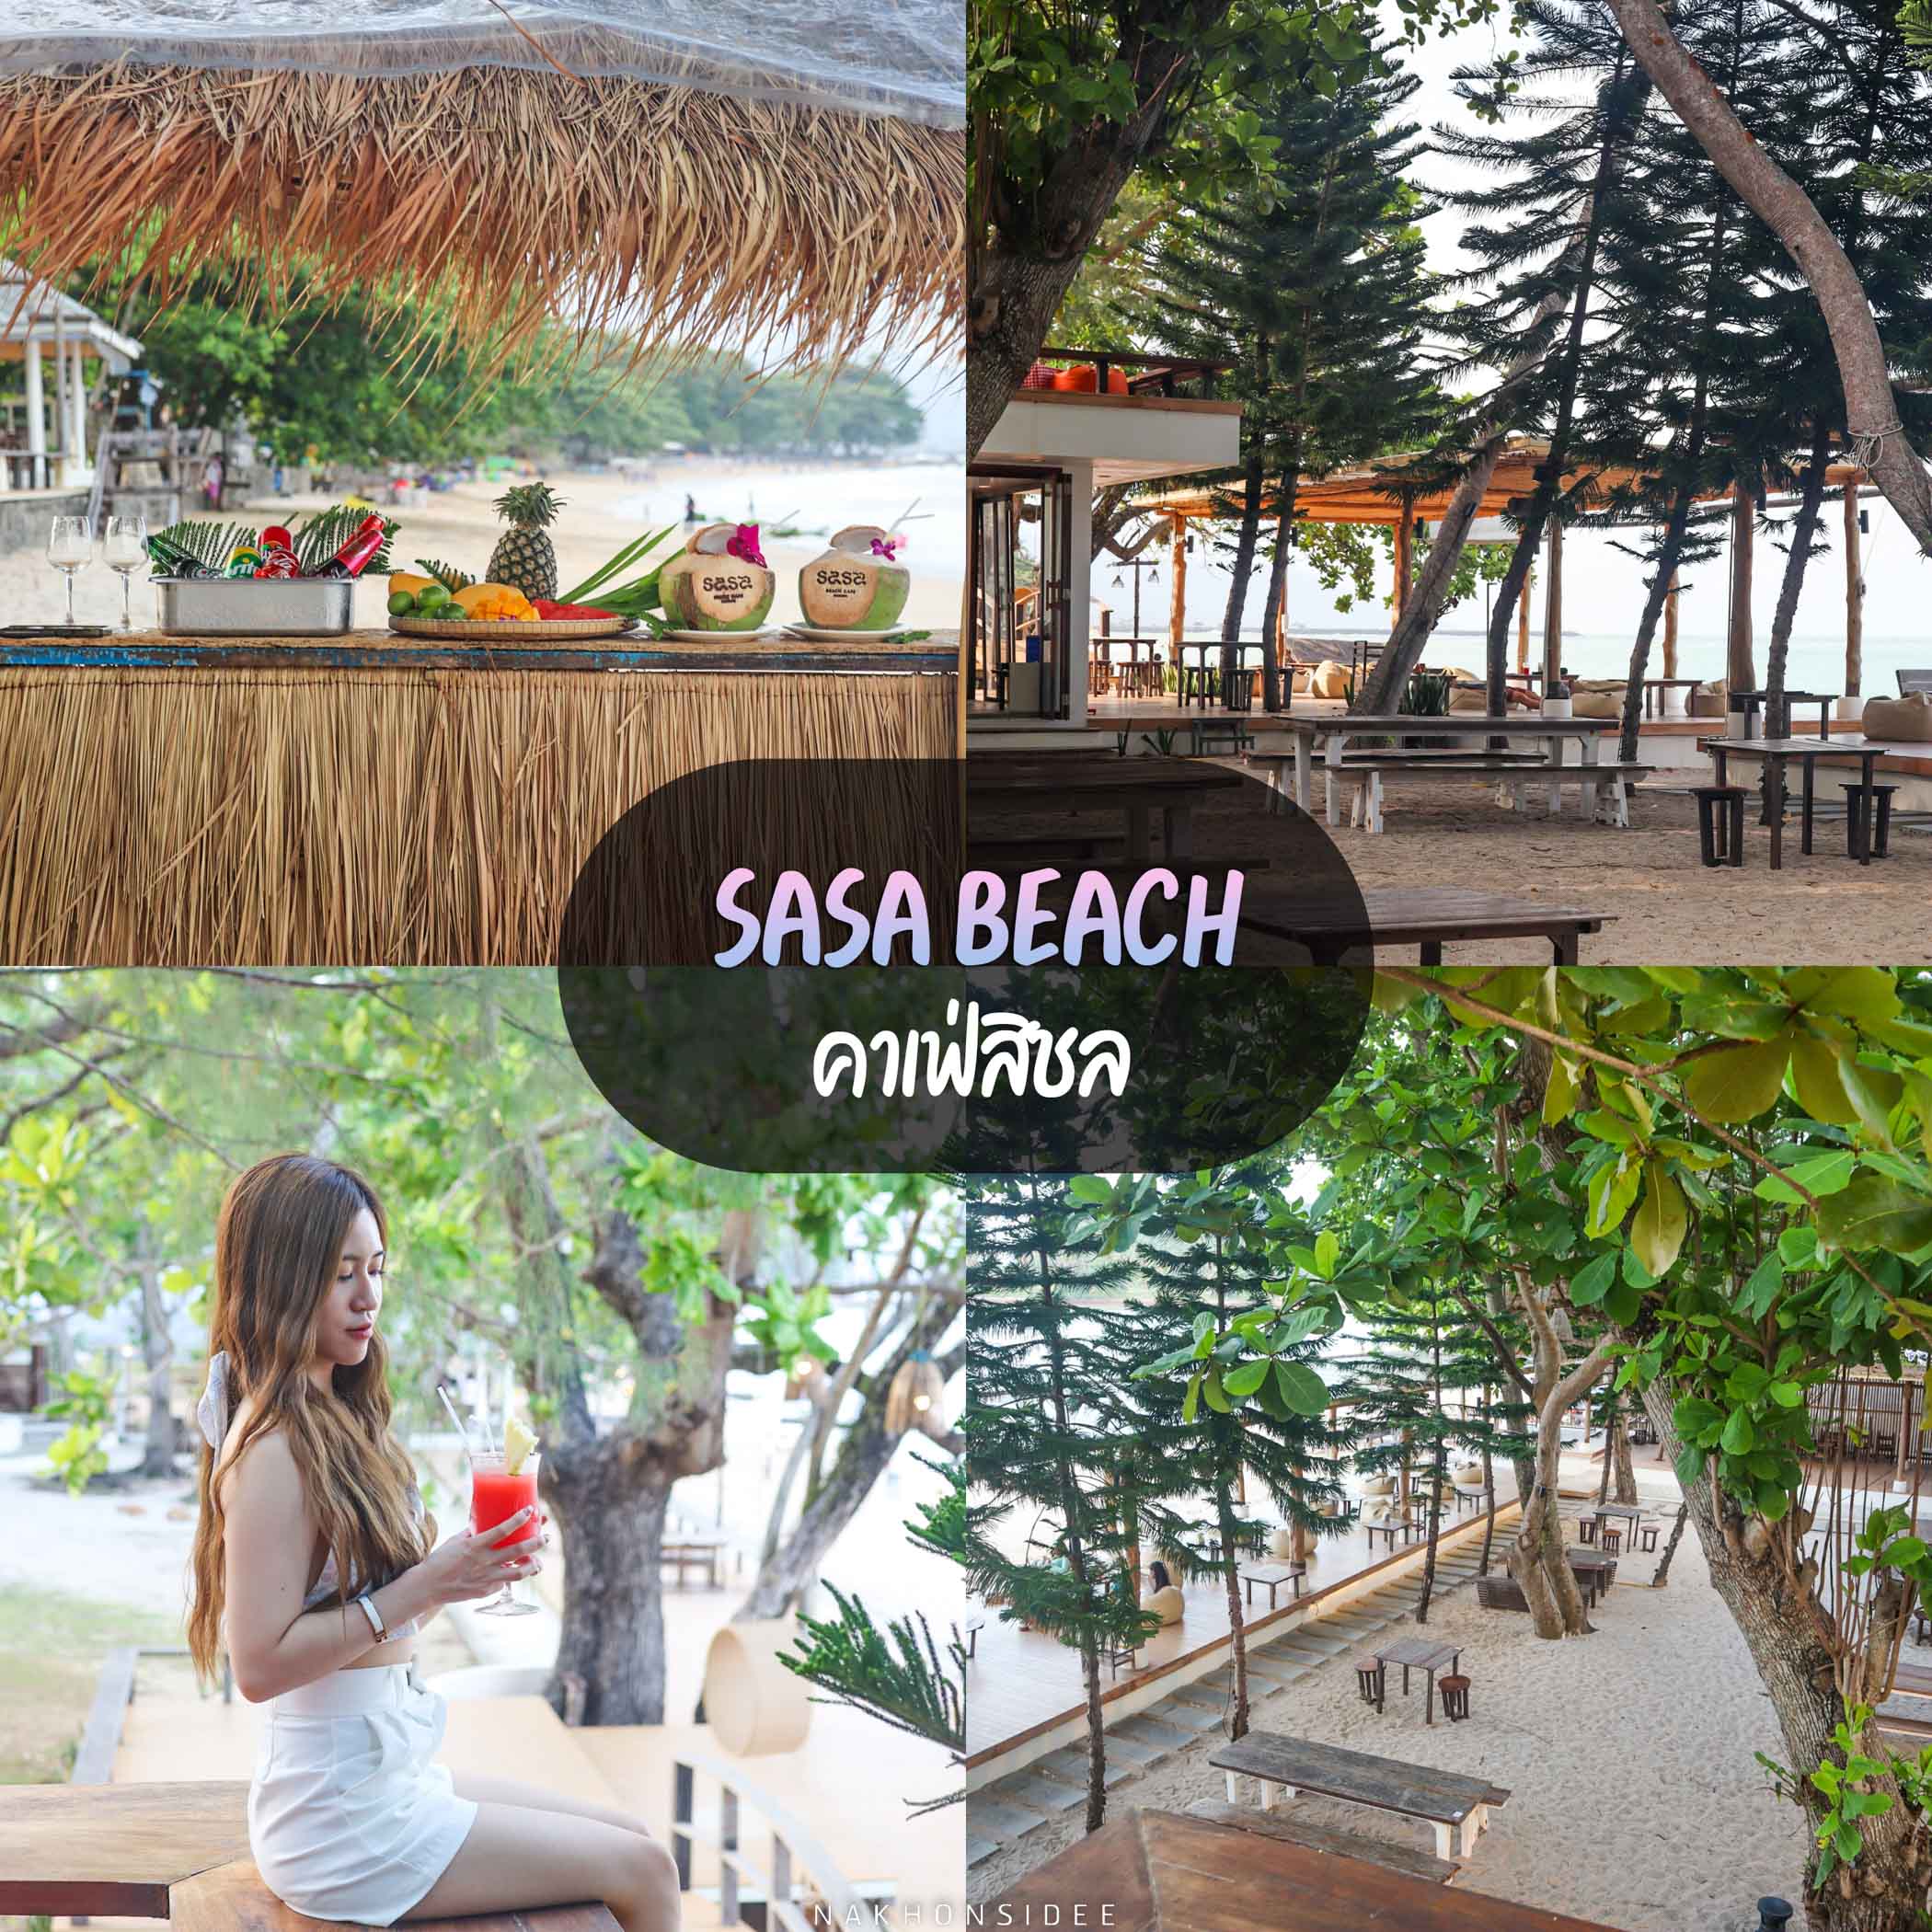 SASA-Beach-Cafe-สิชล คาเฟ่สิชล-นครศรีธรรมราช-บอกเลยว่าต้องมาเช็คอิน-ที่นี่กว้างขวางมีหลากหลายโซน-มีอาหารเครื่องดื่มให้ลองมากมายเลยแหละ-มีห้องพักรีสอร์ท-Issara-Beach-Resort-และร้านอาหาร-แซ่บแซ่บ-ด้วยน้า คาเฟ่,นครศรีธรรมราช,2021,จุดกิน,ของกิน,วิวหลักล้าน,ร้านกาแฟ